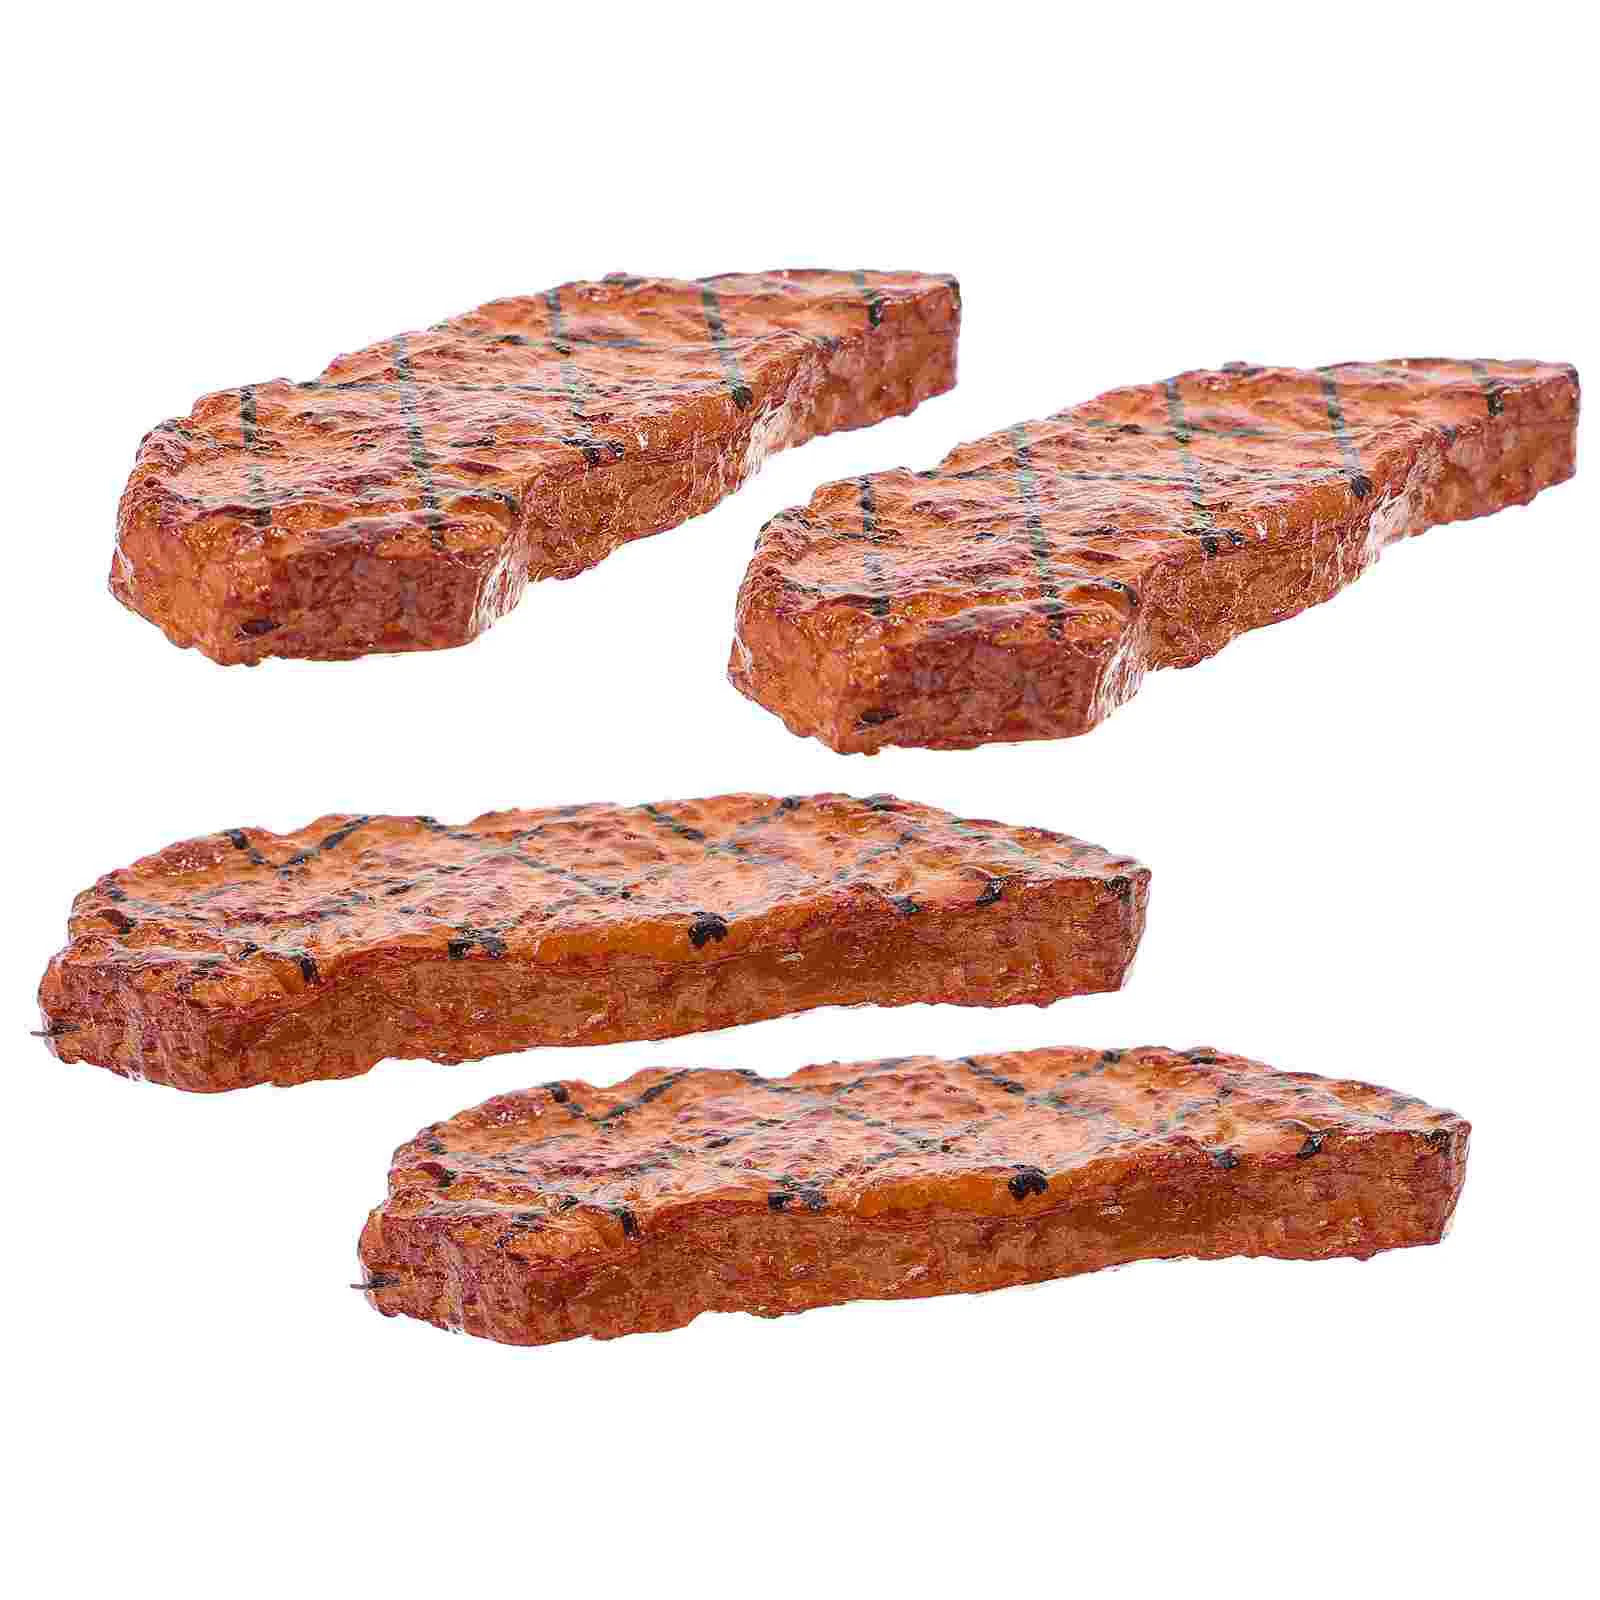 

4 pcs Simulated Steak Artificial Meat Realistic Cooked Roast Steak Fake Steak Models